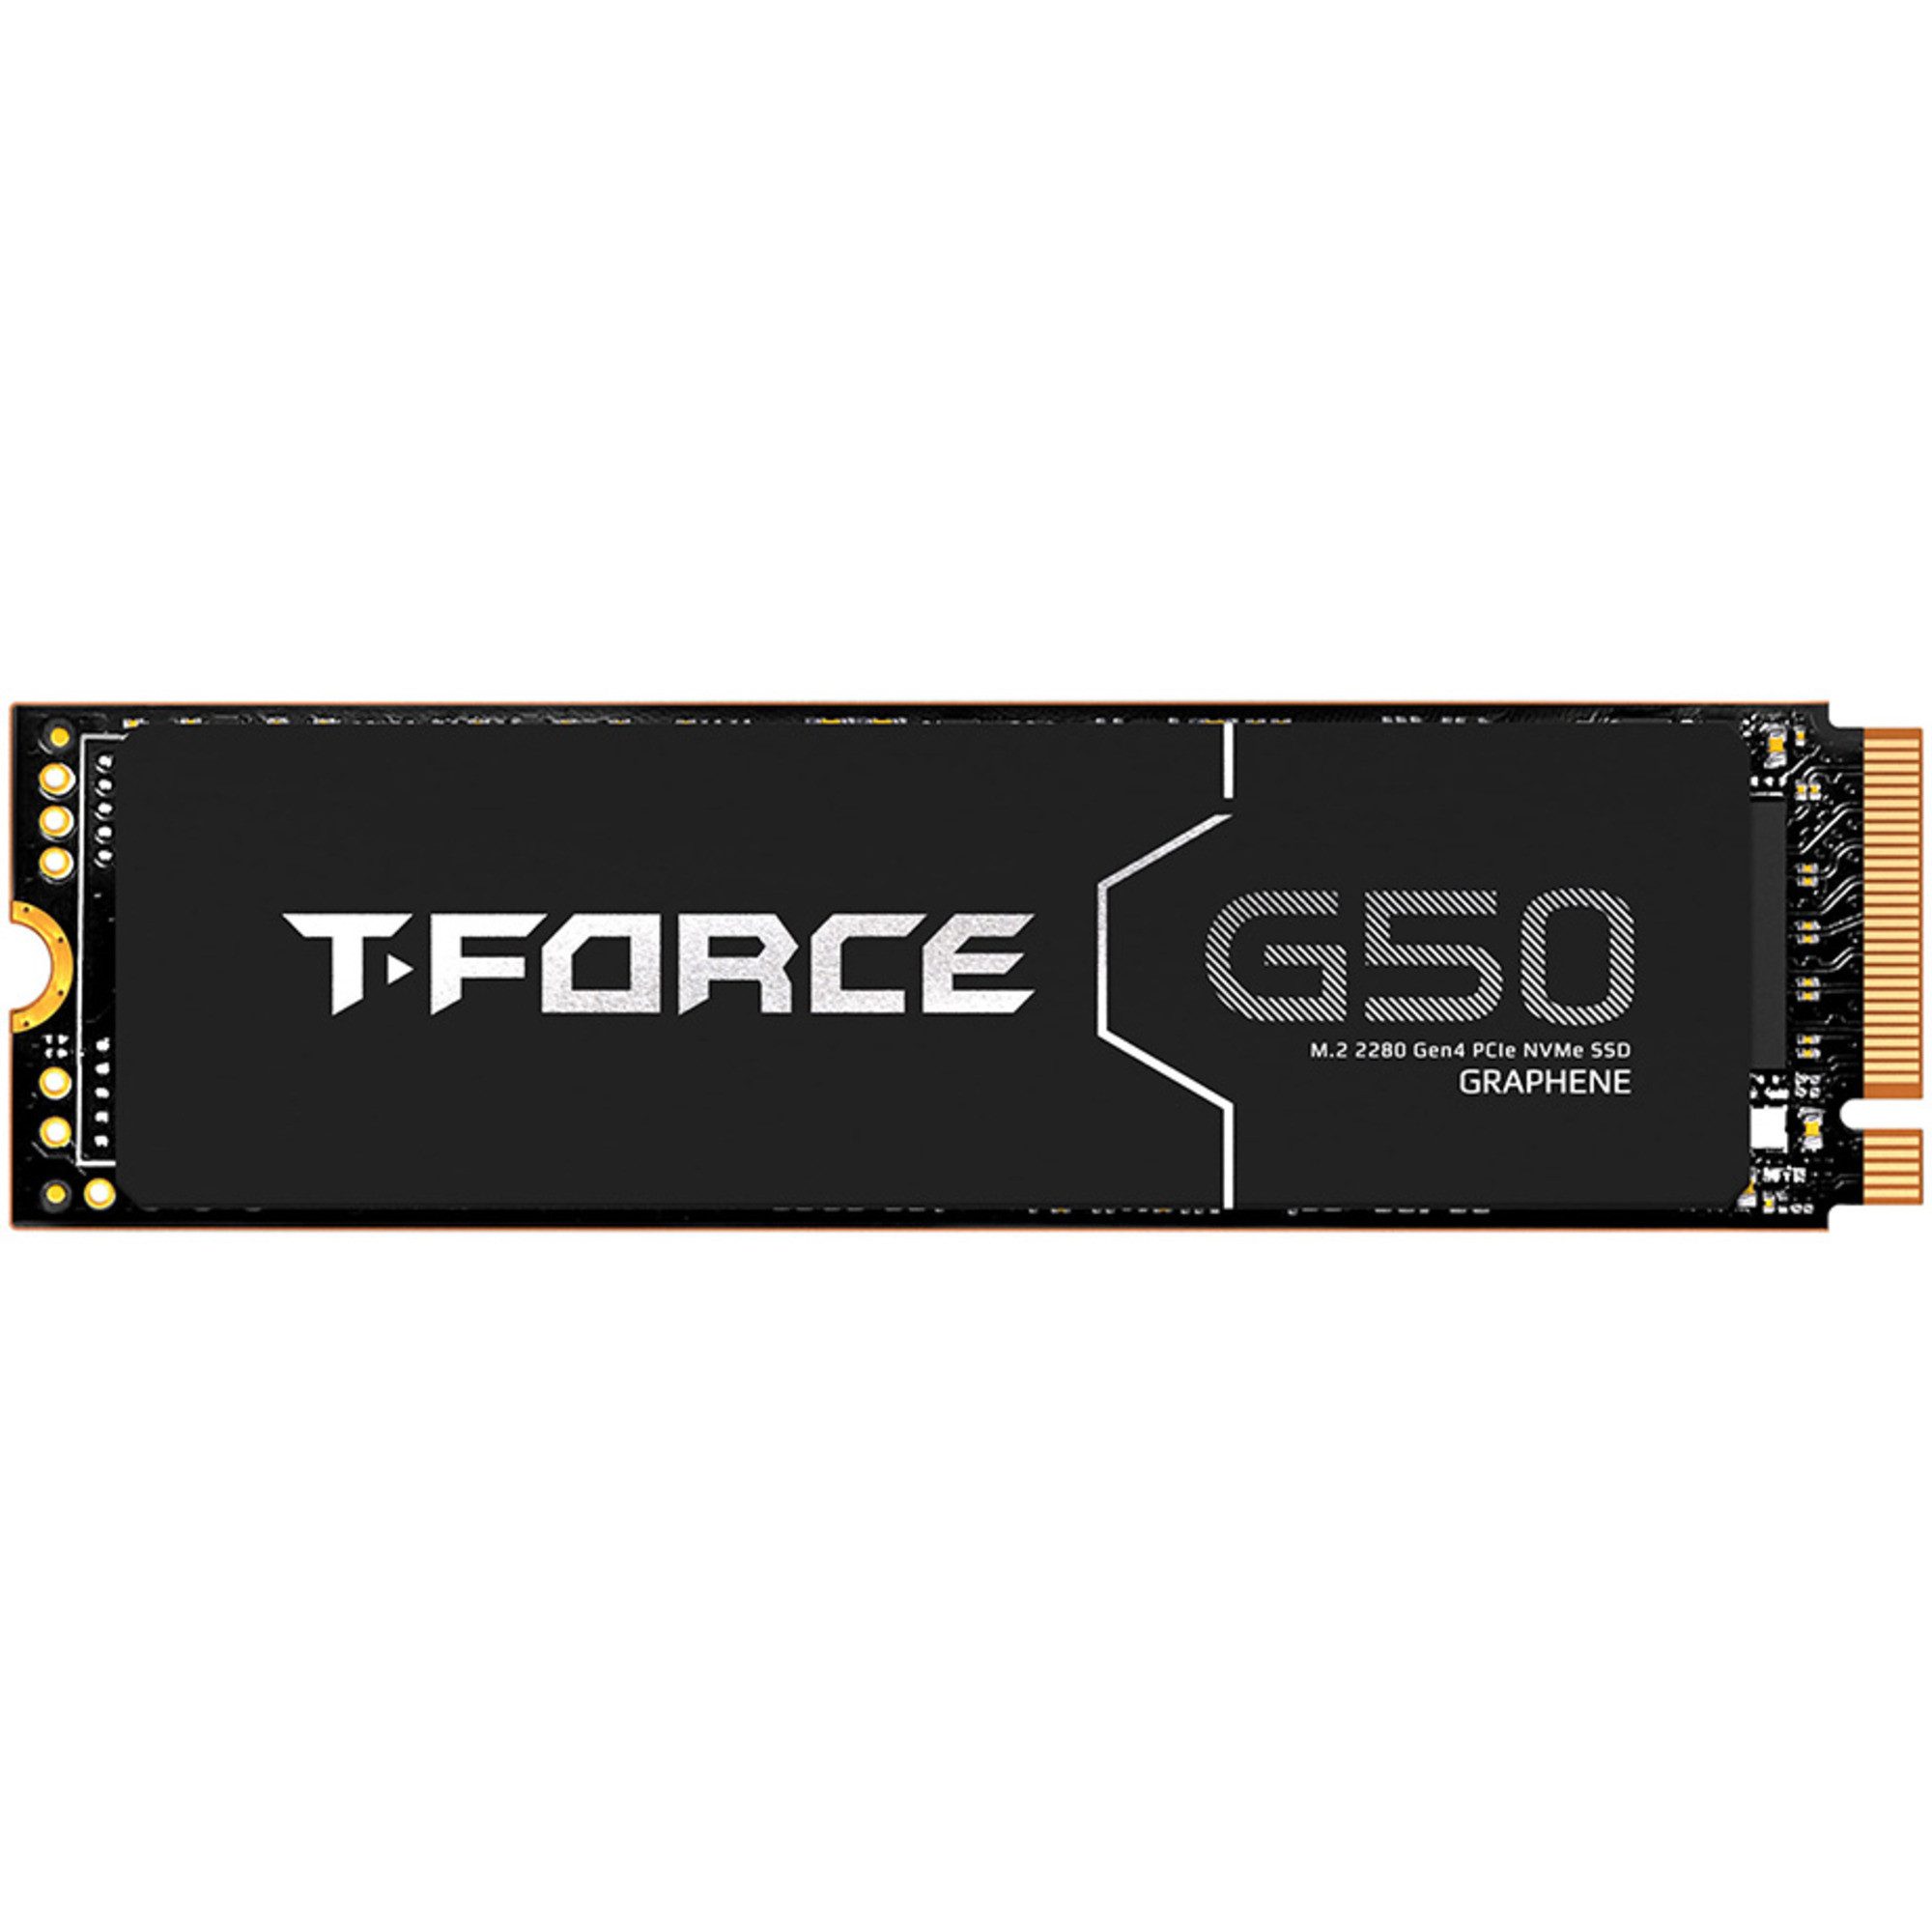 Teamgroup T-FORCE G50 1 TB SSD-Festplatte (1 TB) Steckkarte"